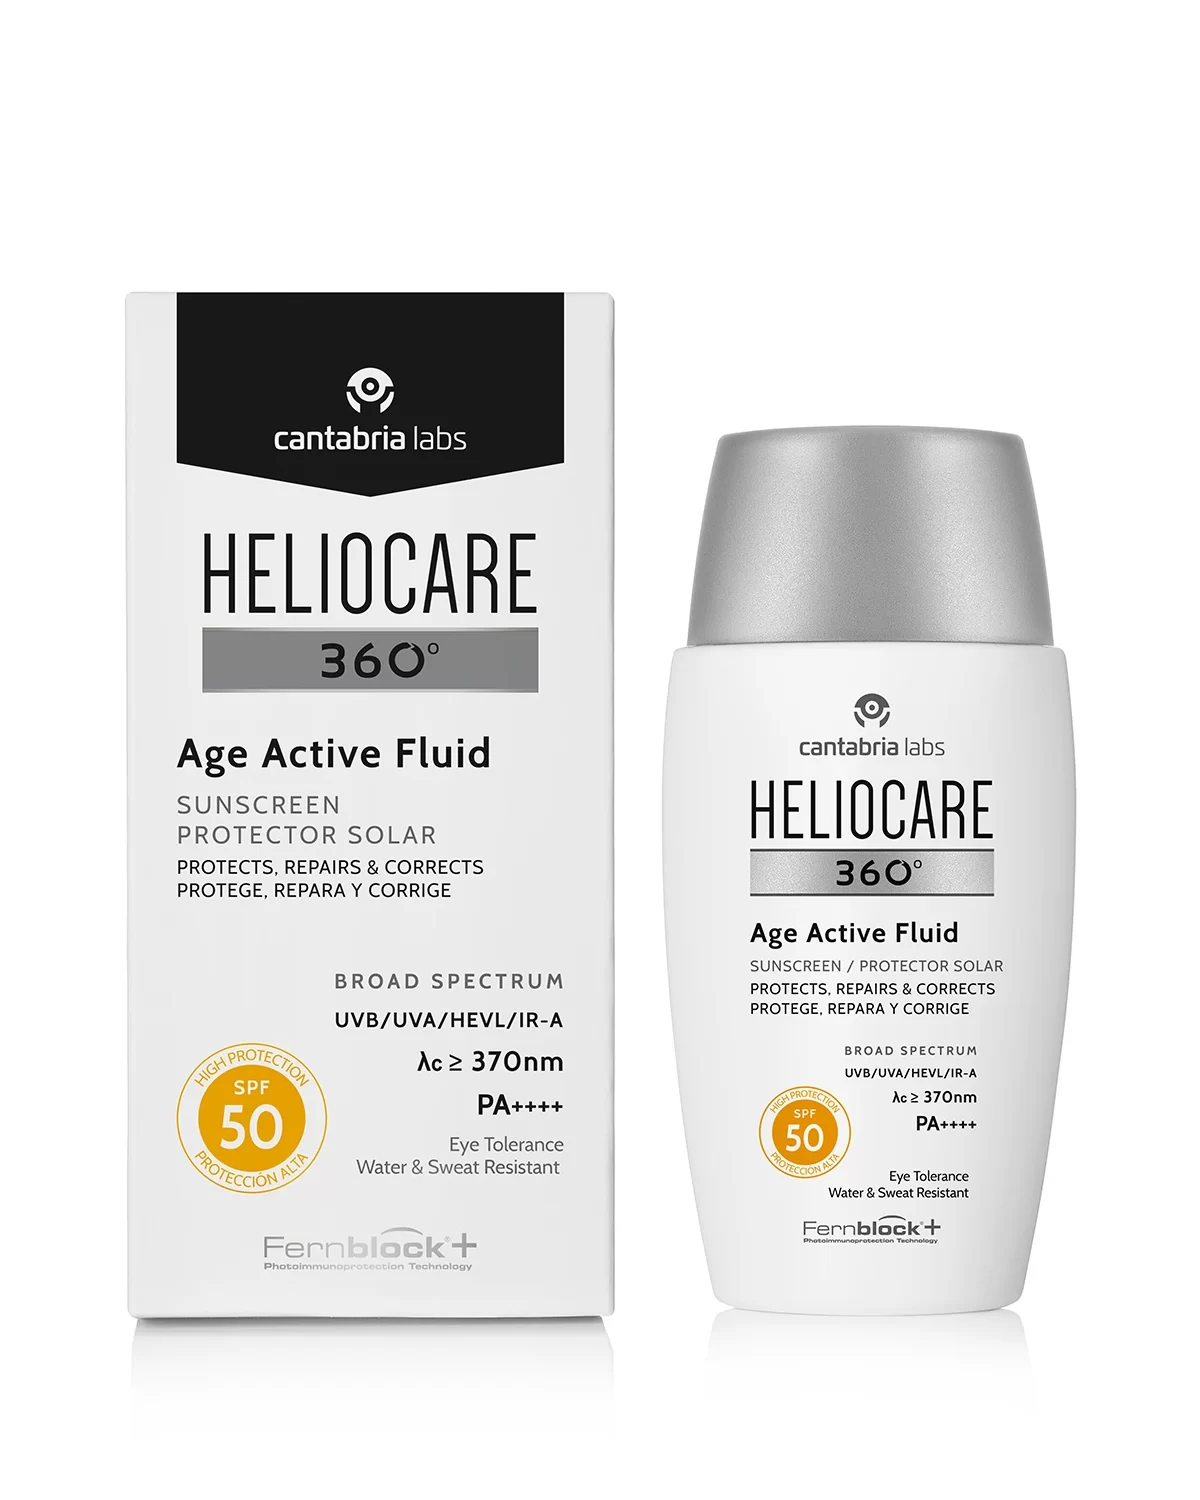 Heliocare 360° Age Active Fluid